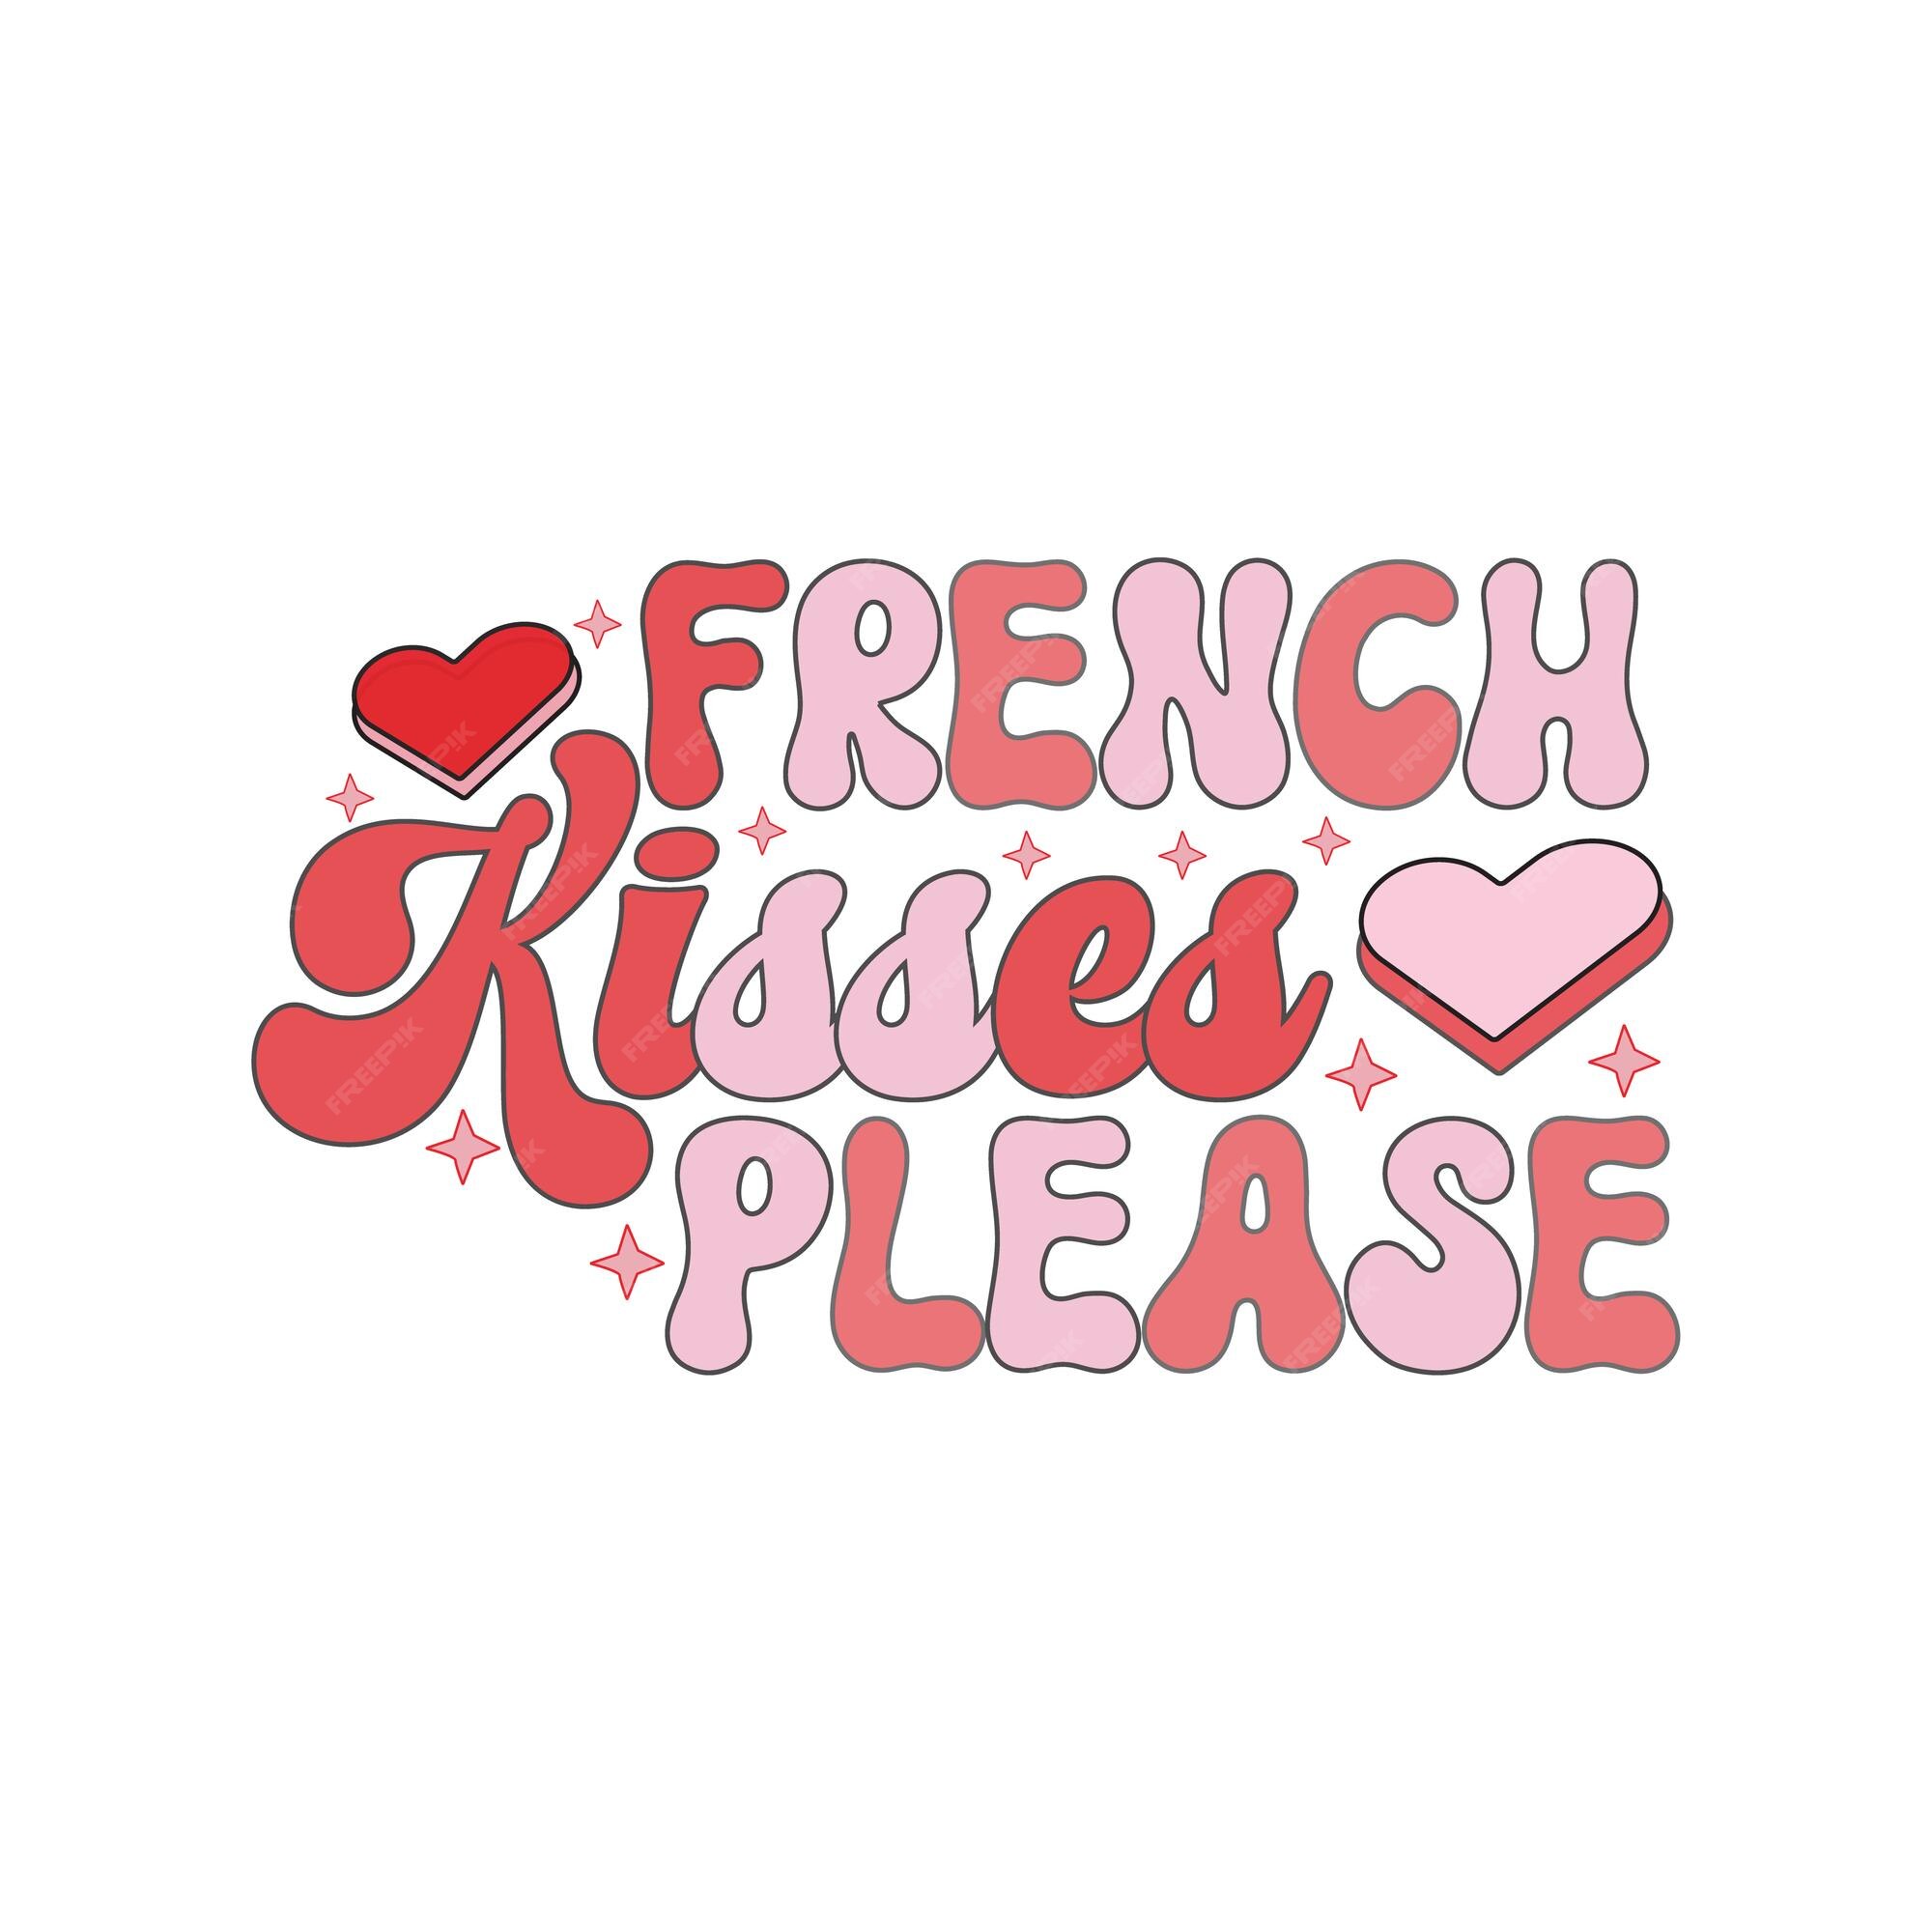 Premium Vector | French kisses please